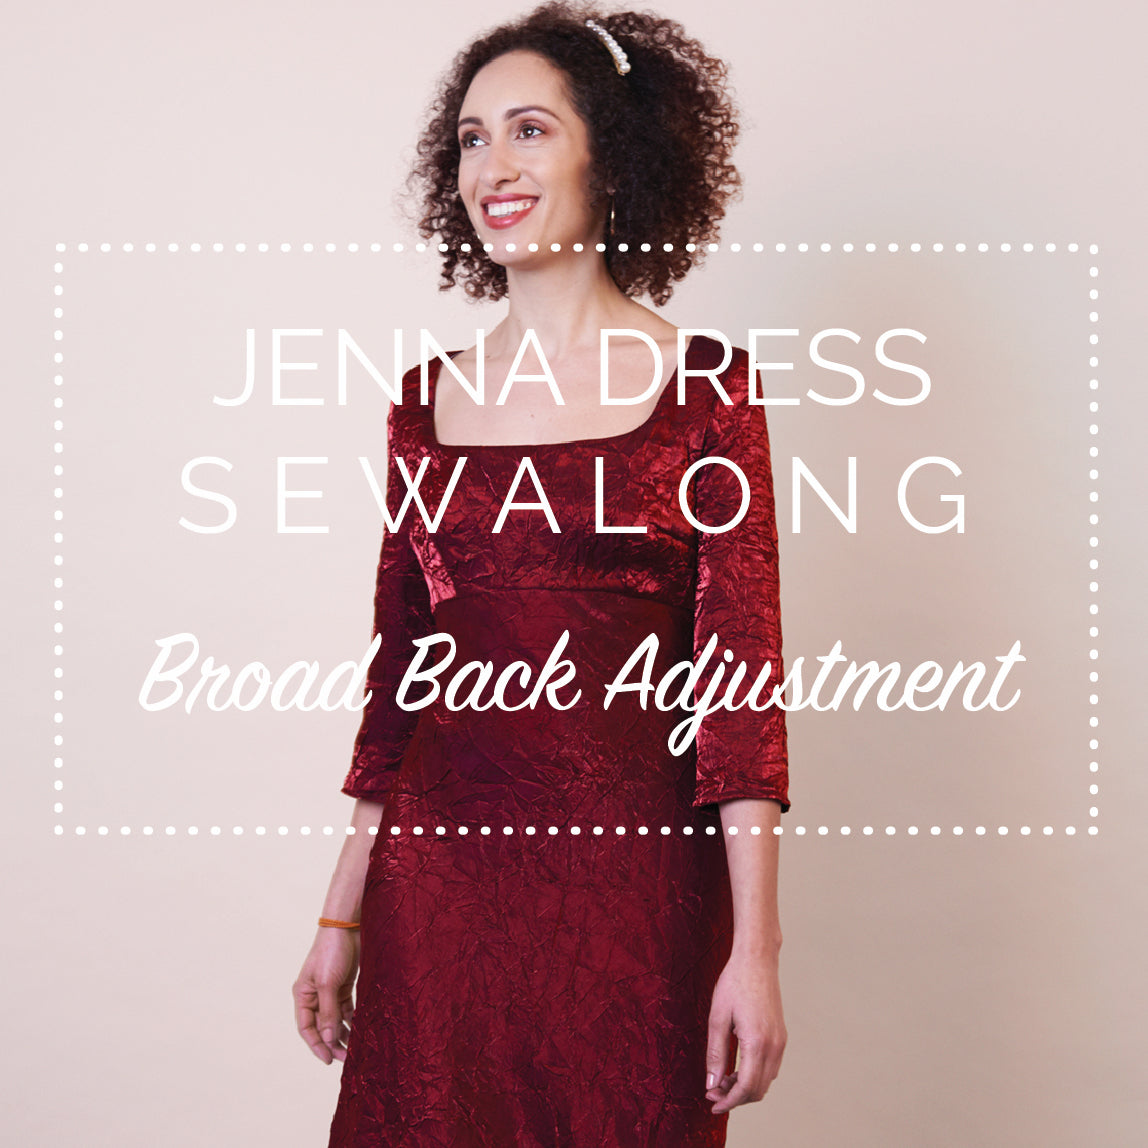 Jenna Dress Sewalong - How to fix a tight back (broad back alteration)